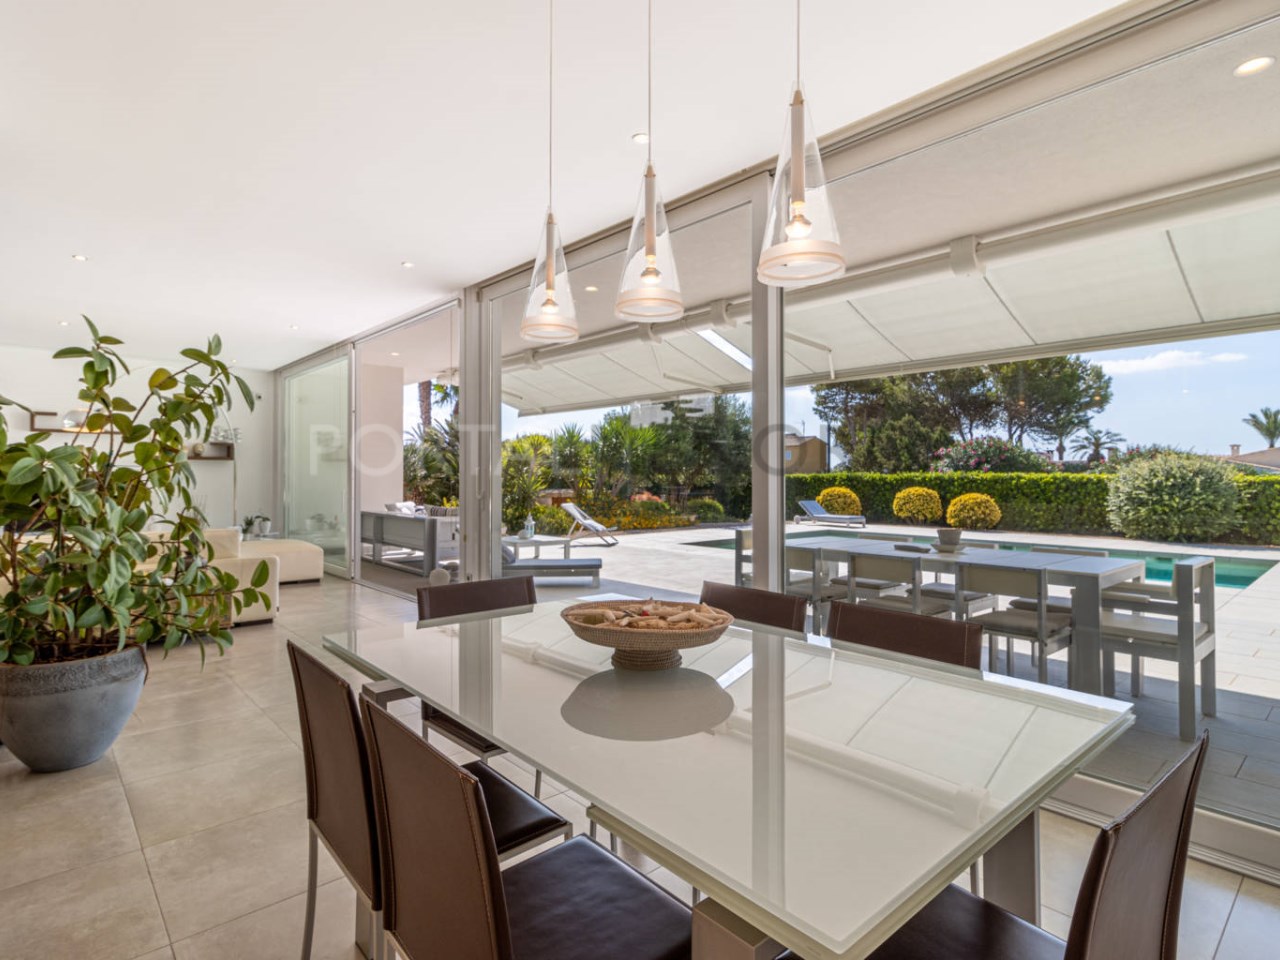 Luxury properties Menorca